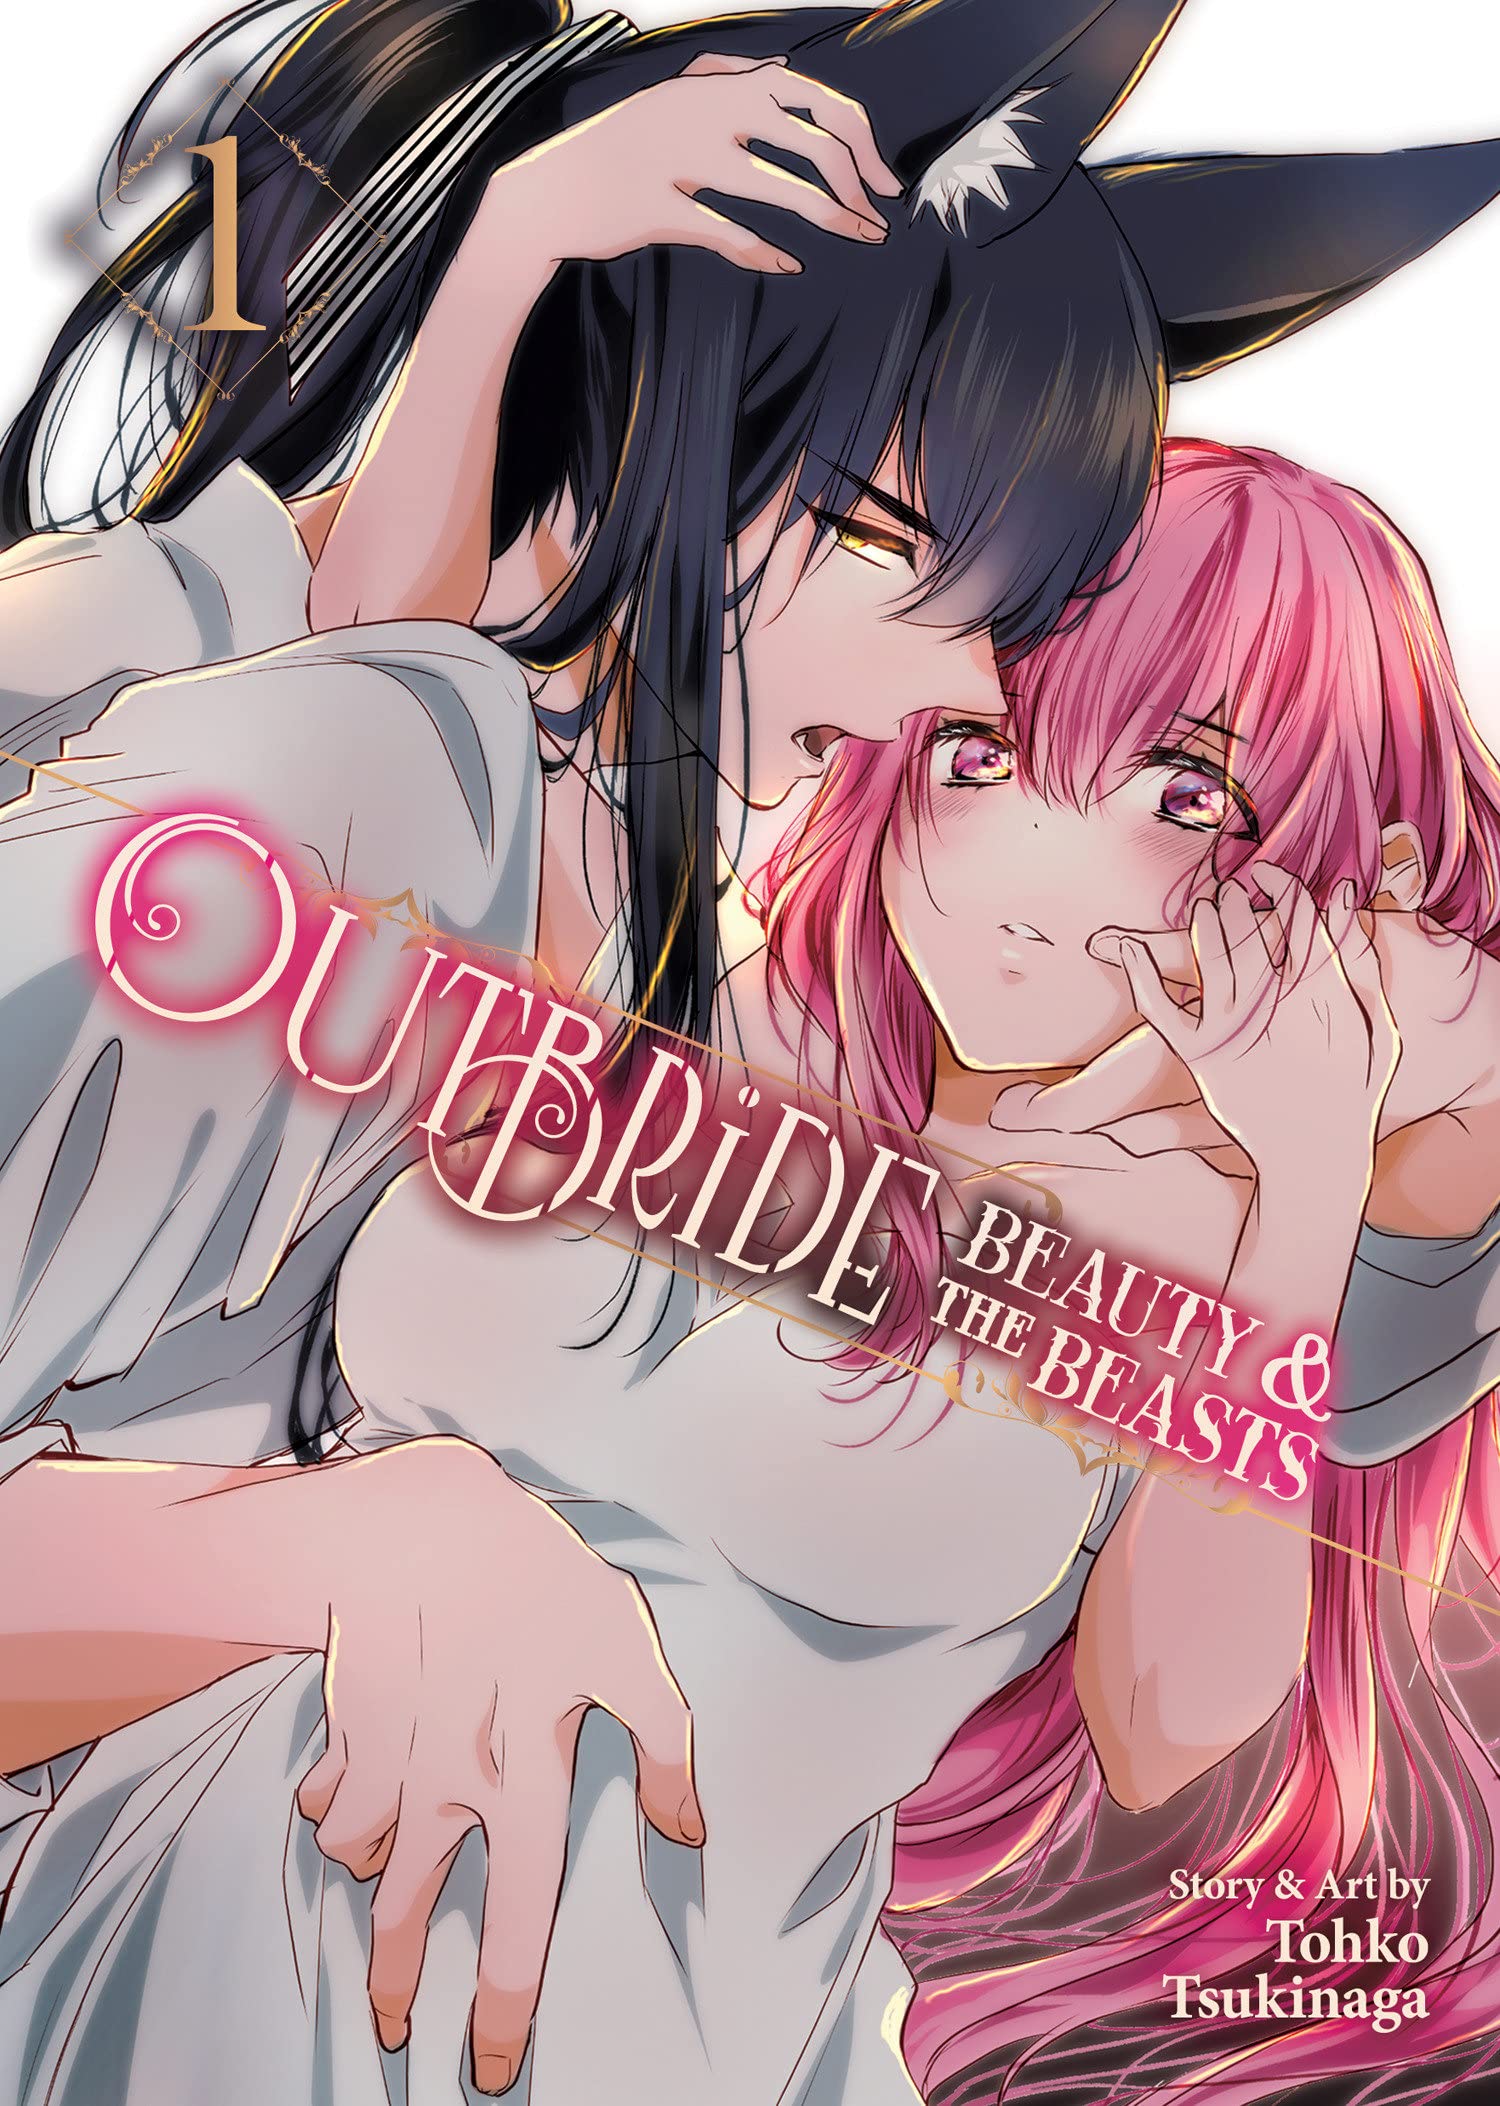 Outbride: Beauty and the Beasts - Volume 1 | Tohko Tsukinaga